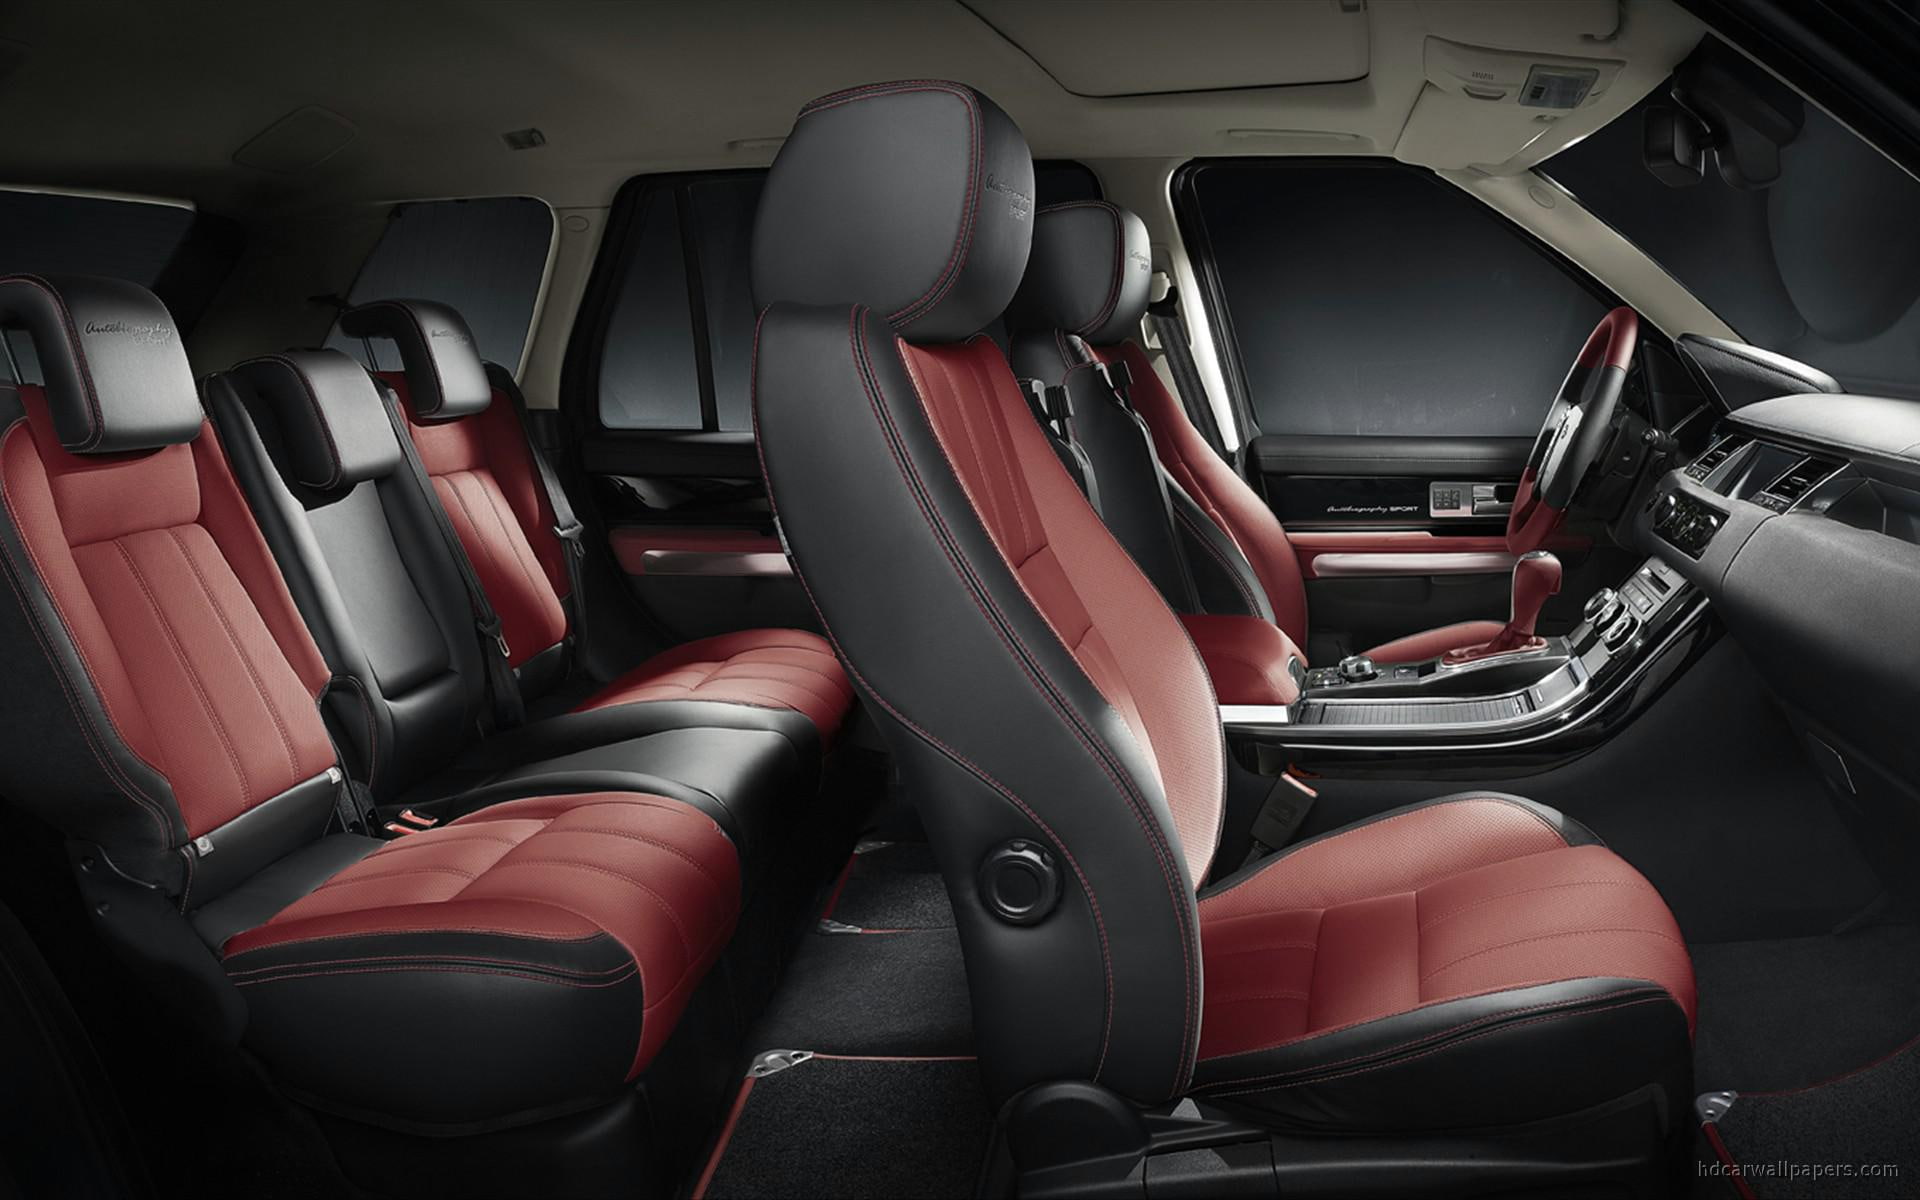 2010 Range Rover Sport Interior, black and red car interior, cars